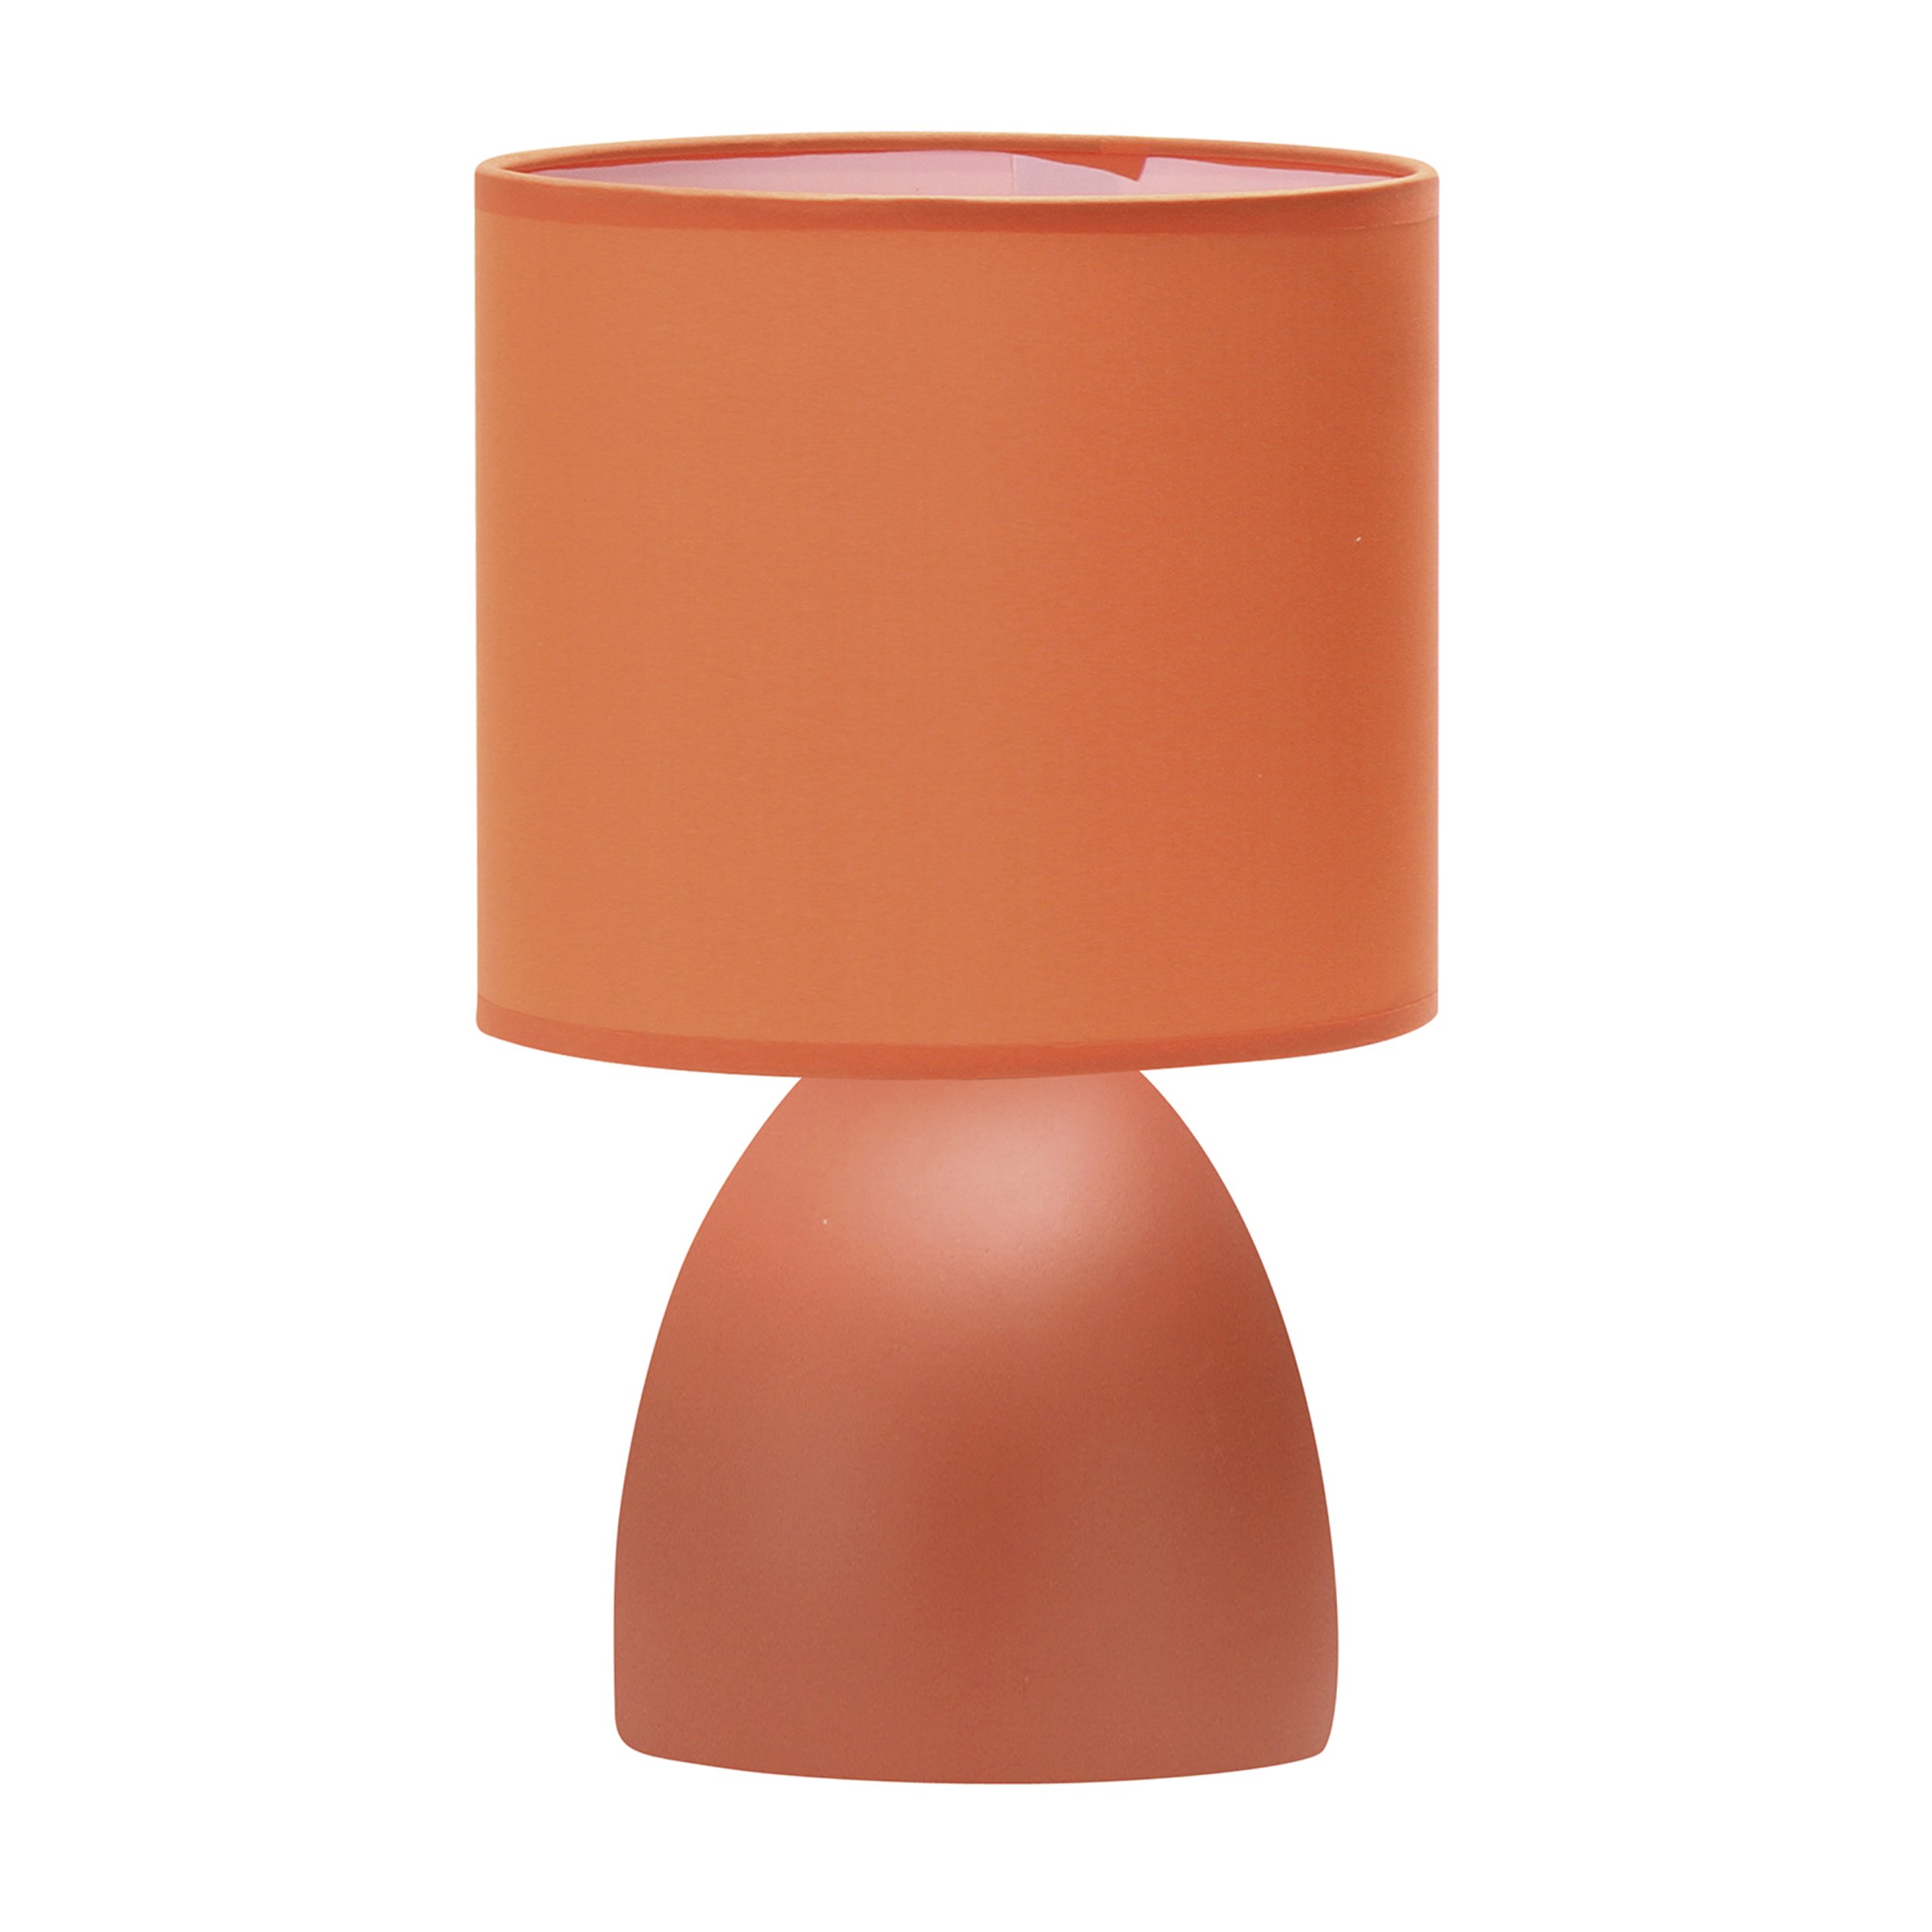 Декоративная настольная лампа Rivoli NADINE 7047-502, цвет оранжевый 7047-502 Б0057257 - фото 1